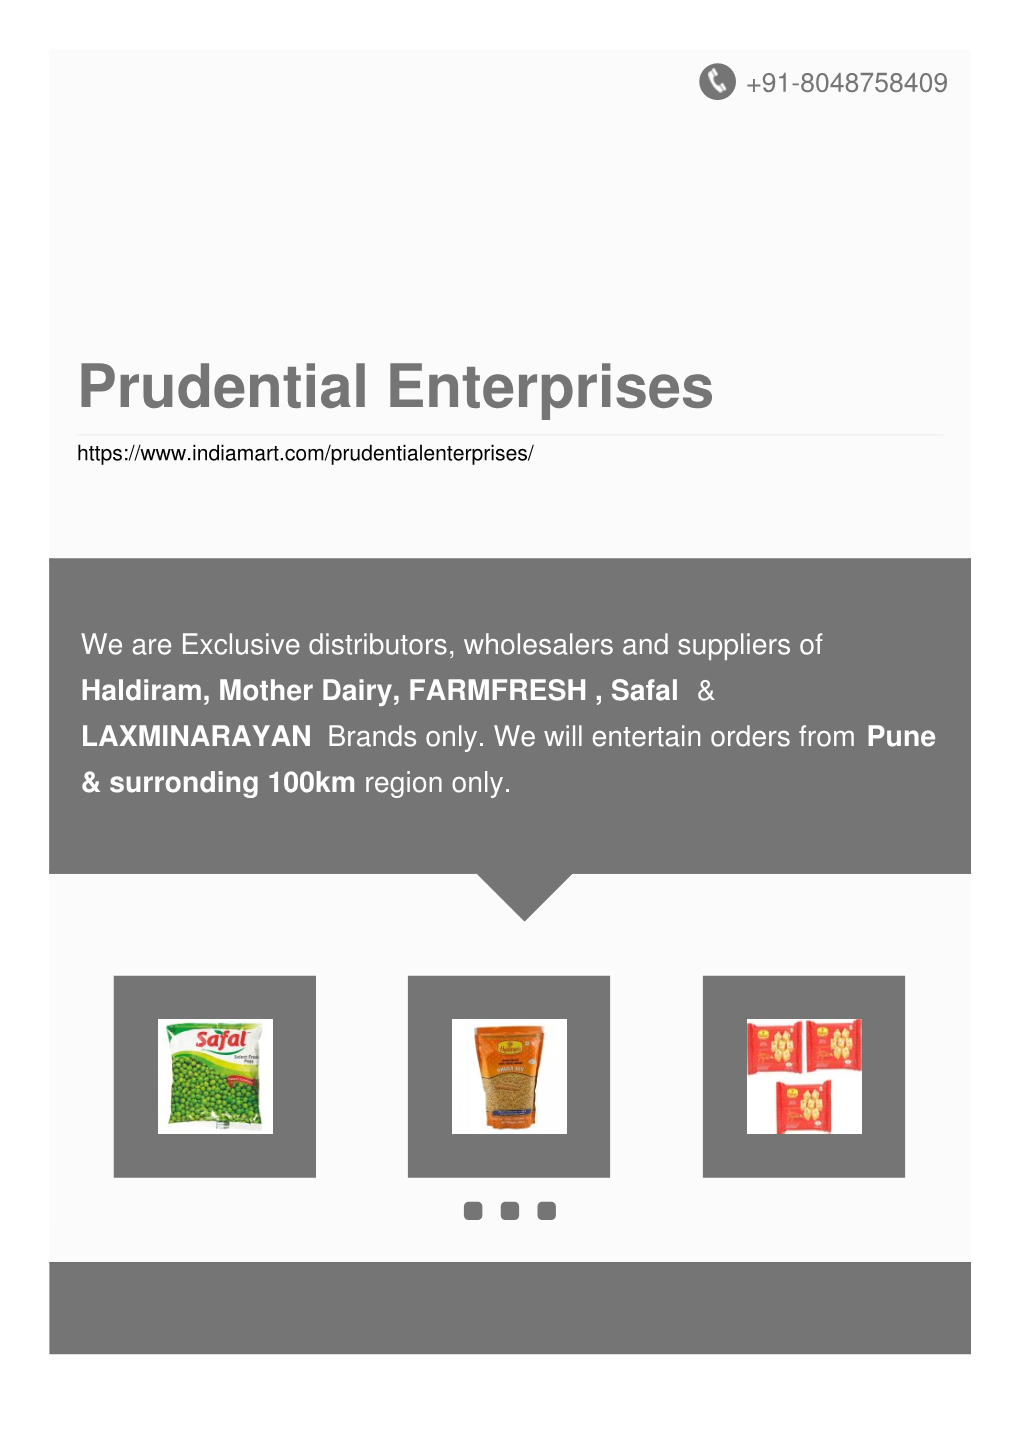 Prudential Enterprises